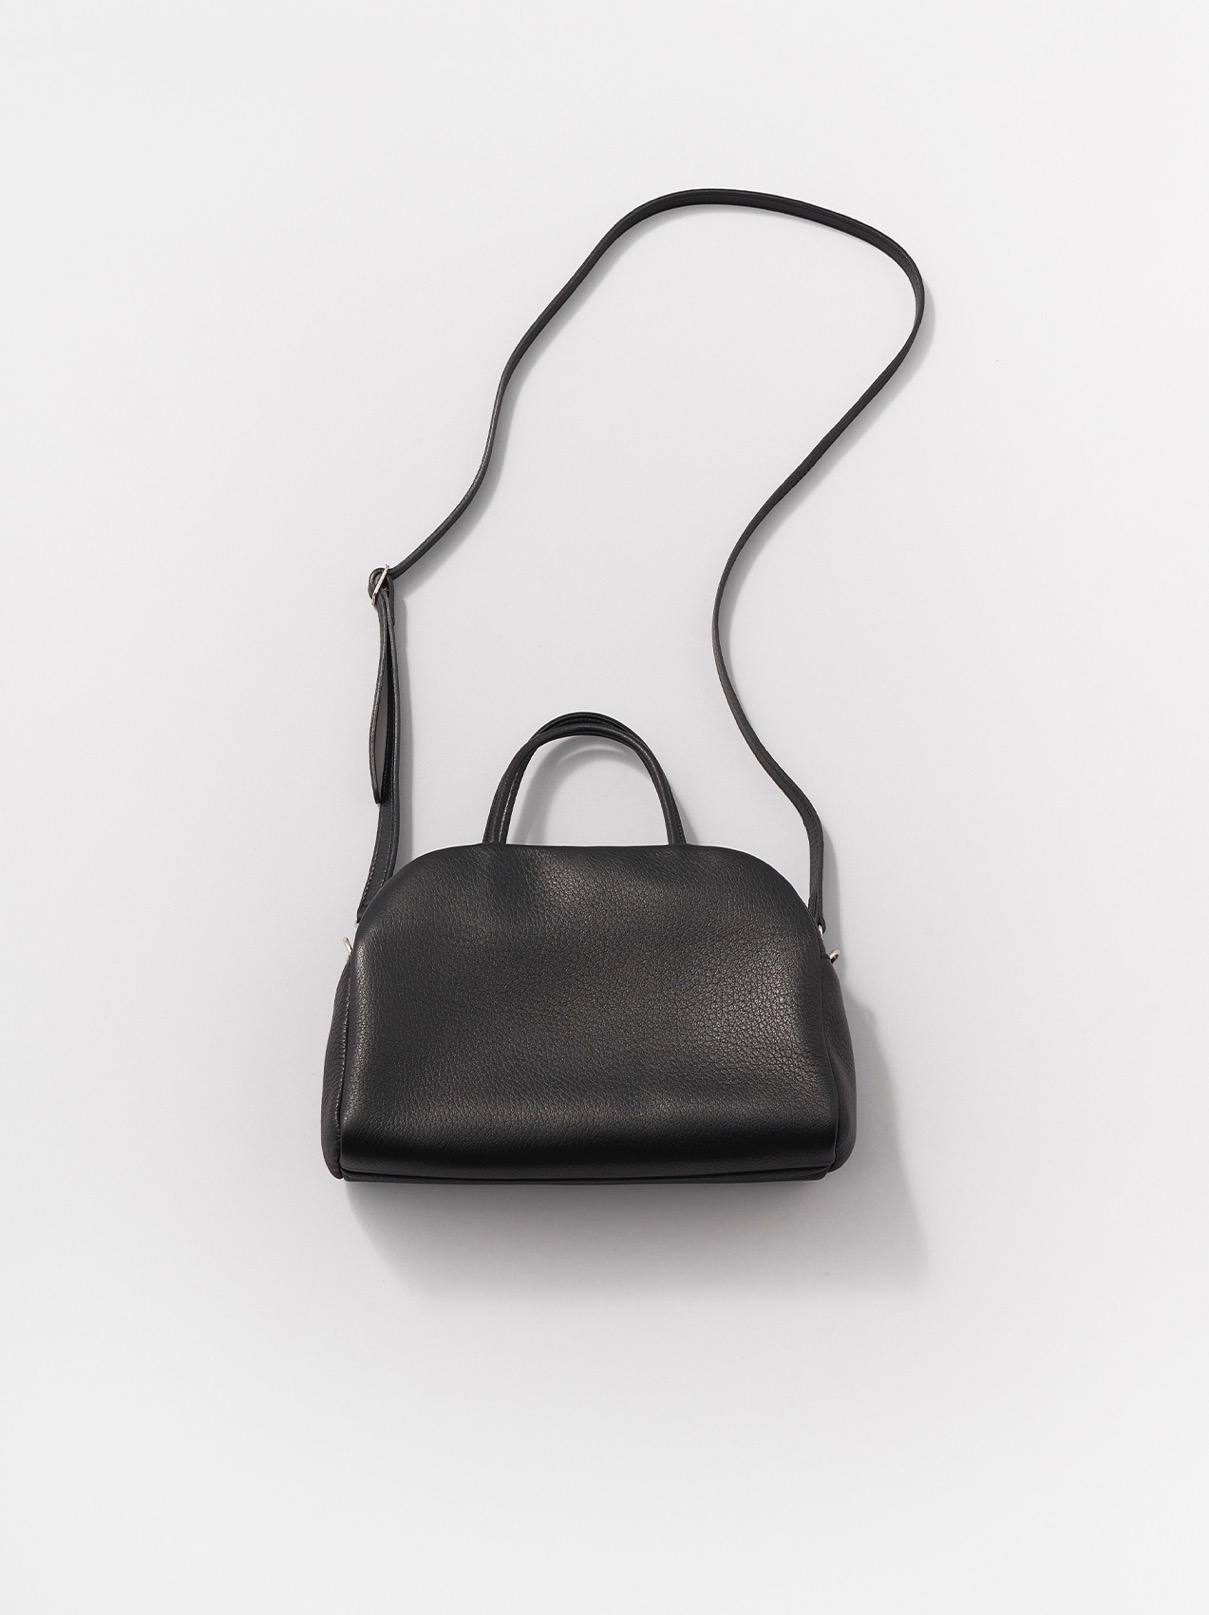 ARTSSCIENCEアーツサイエンスbowling bag miniバッグ - 通販 - csa ...